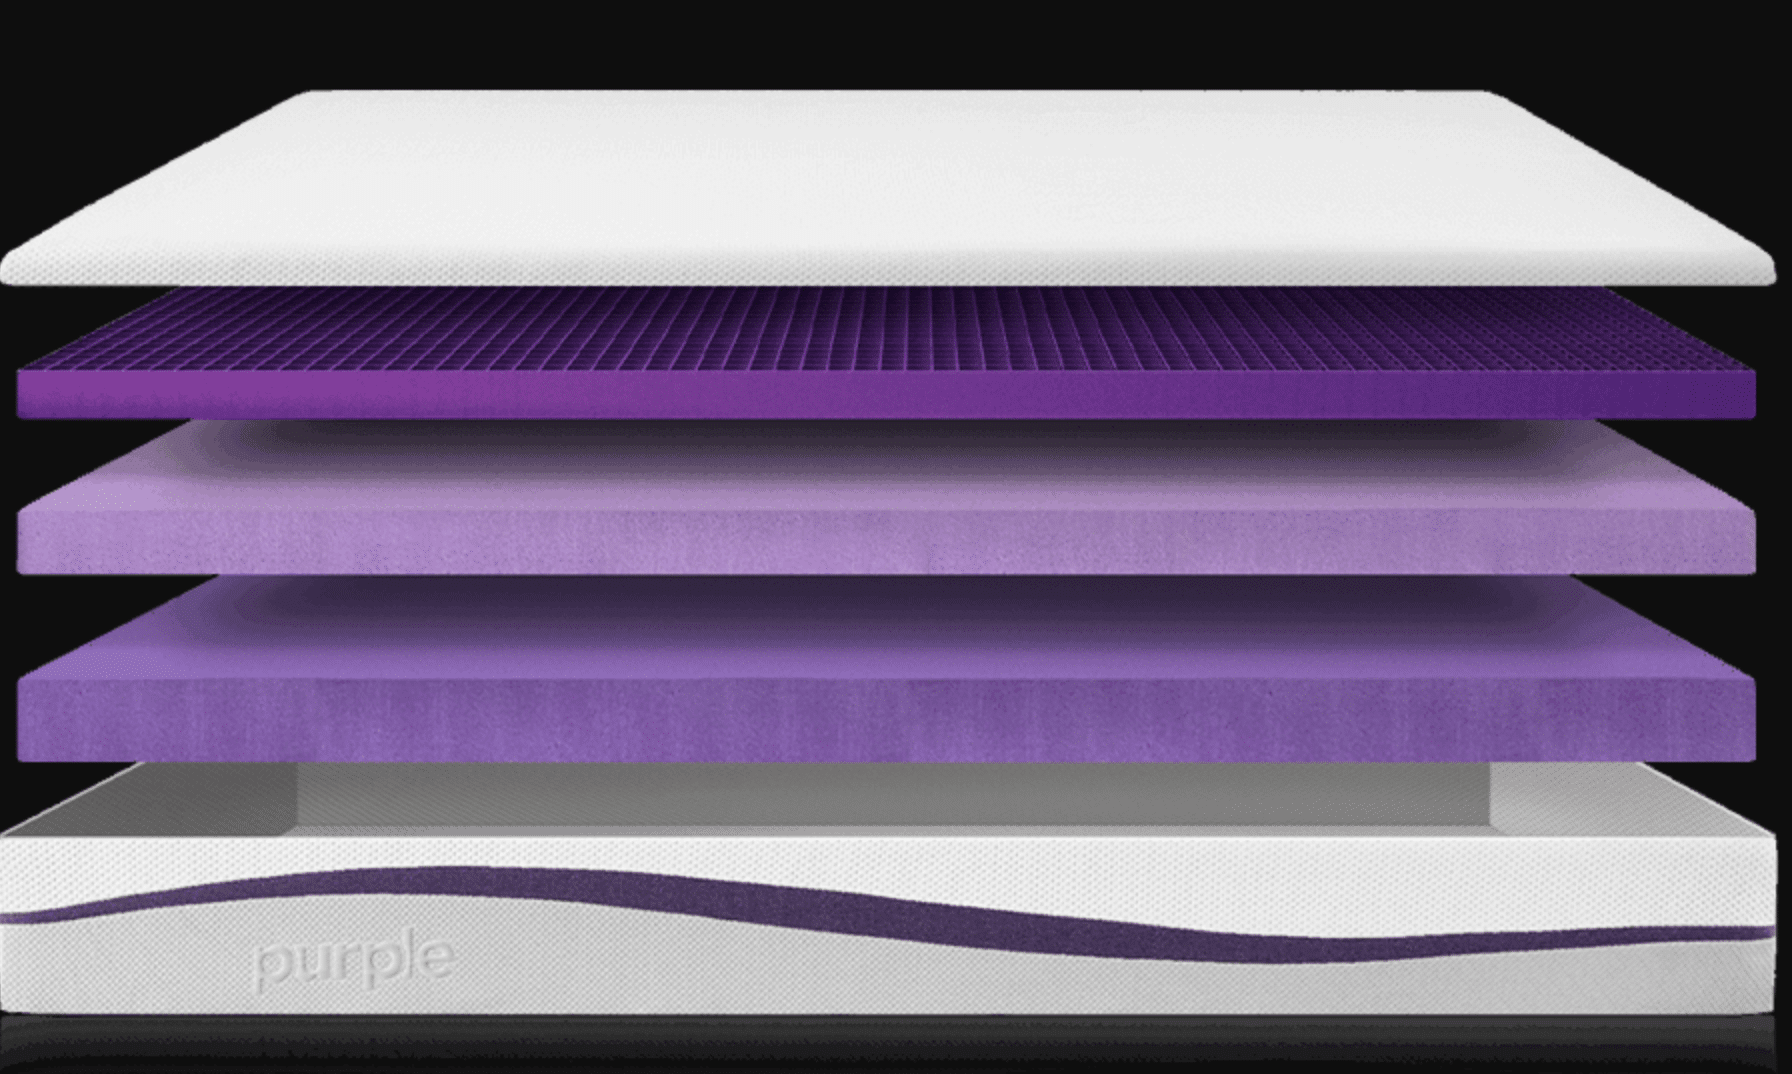 purple mattress protector material